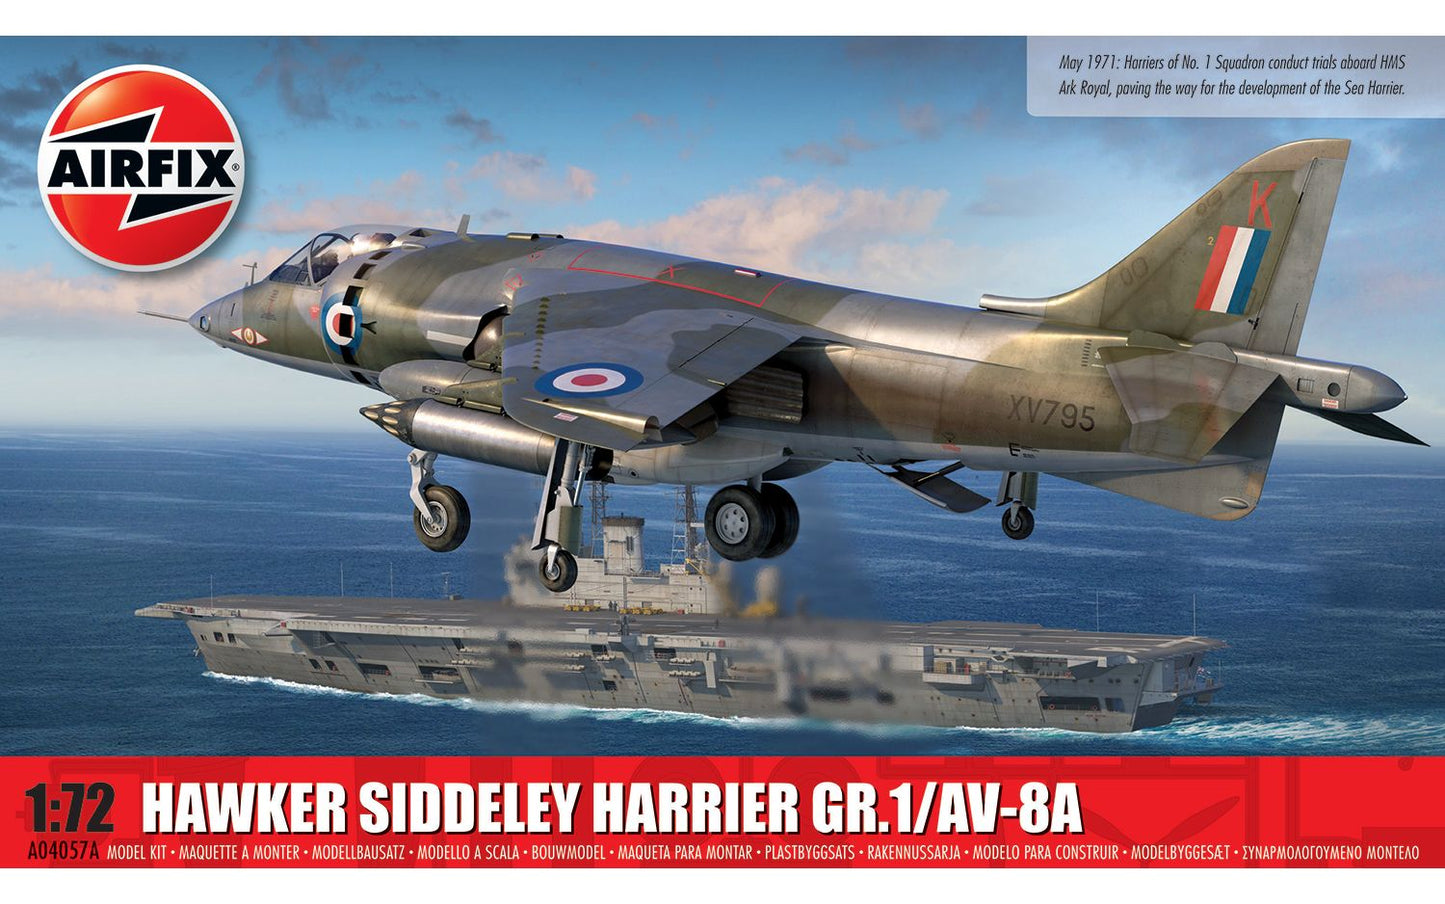 Airfix Products A04057A 1:72 Hawker Siddeley Harrier GR.1/AV-8A Model Kit